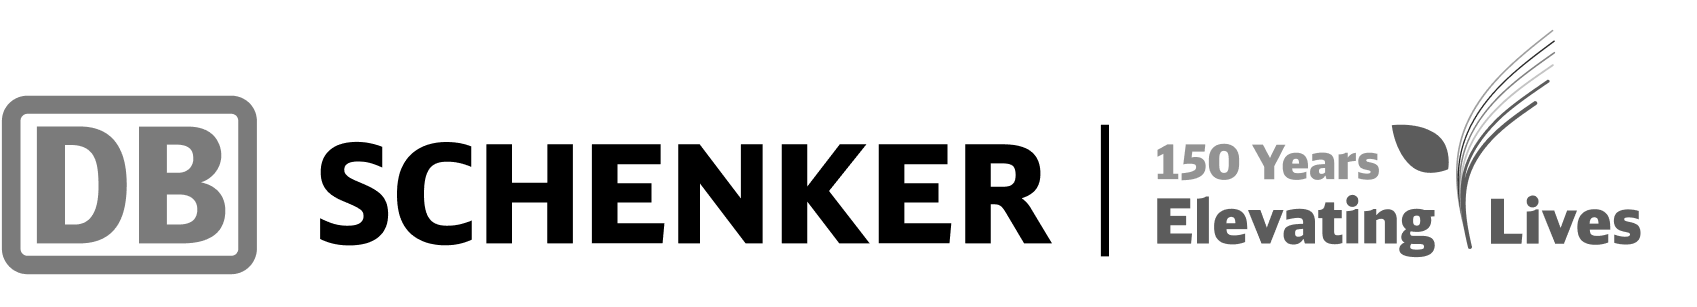 monochromatic DB Schenker logo